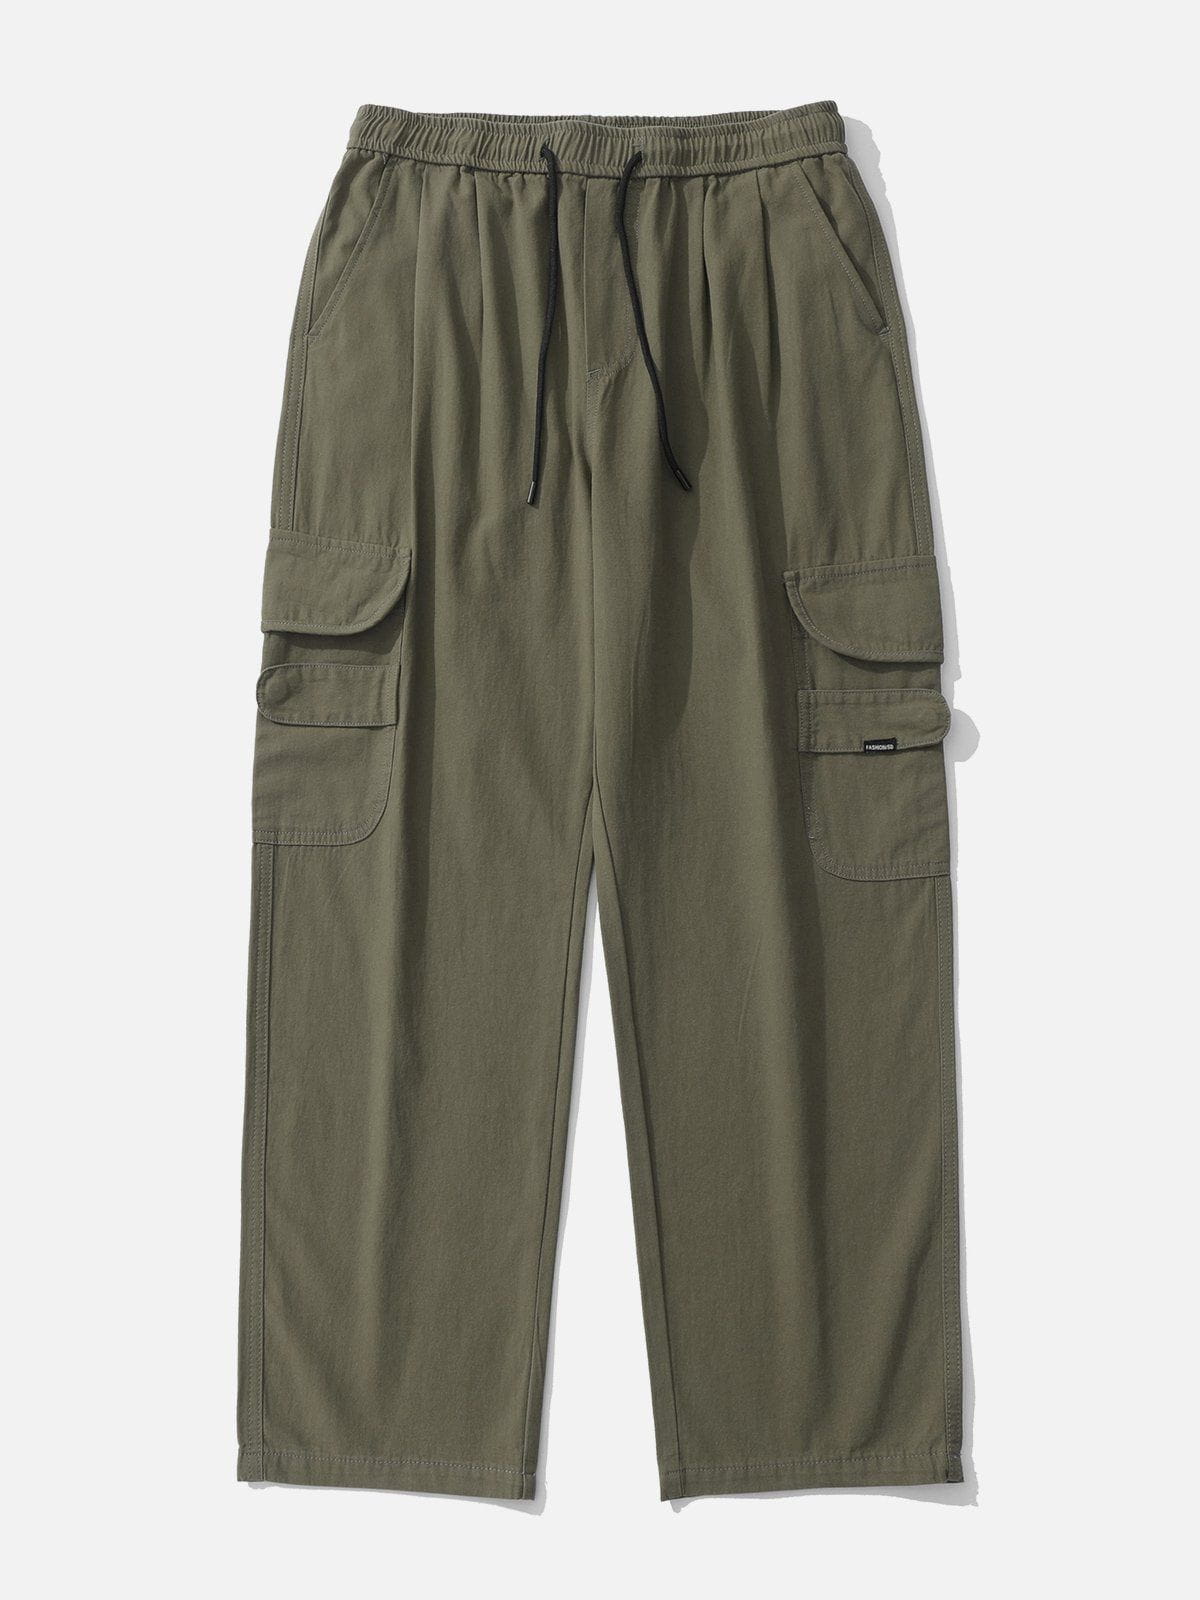 Sneakerland® - Solid Large Multi-Pocket Cargo Pants